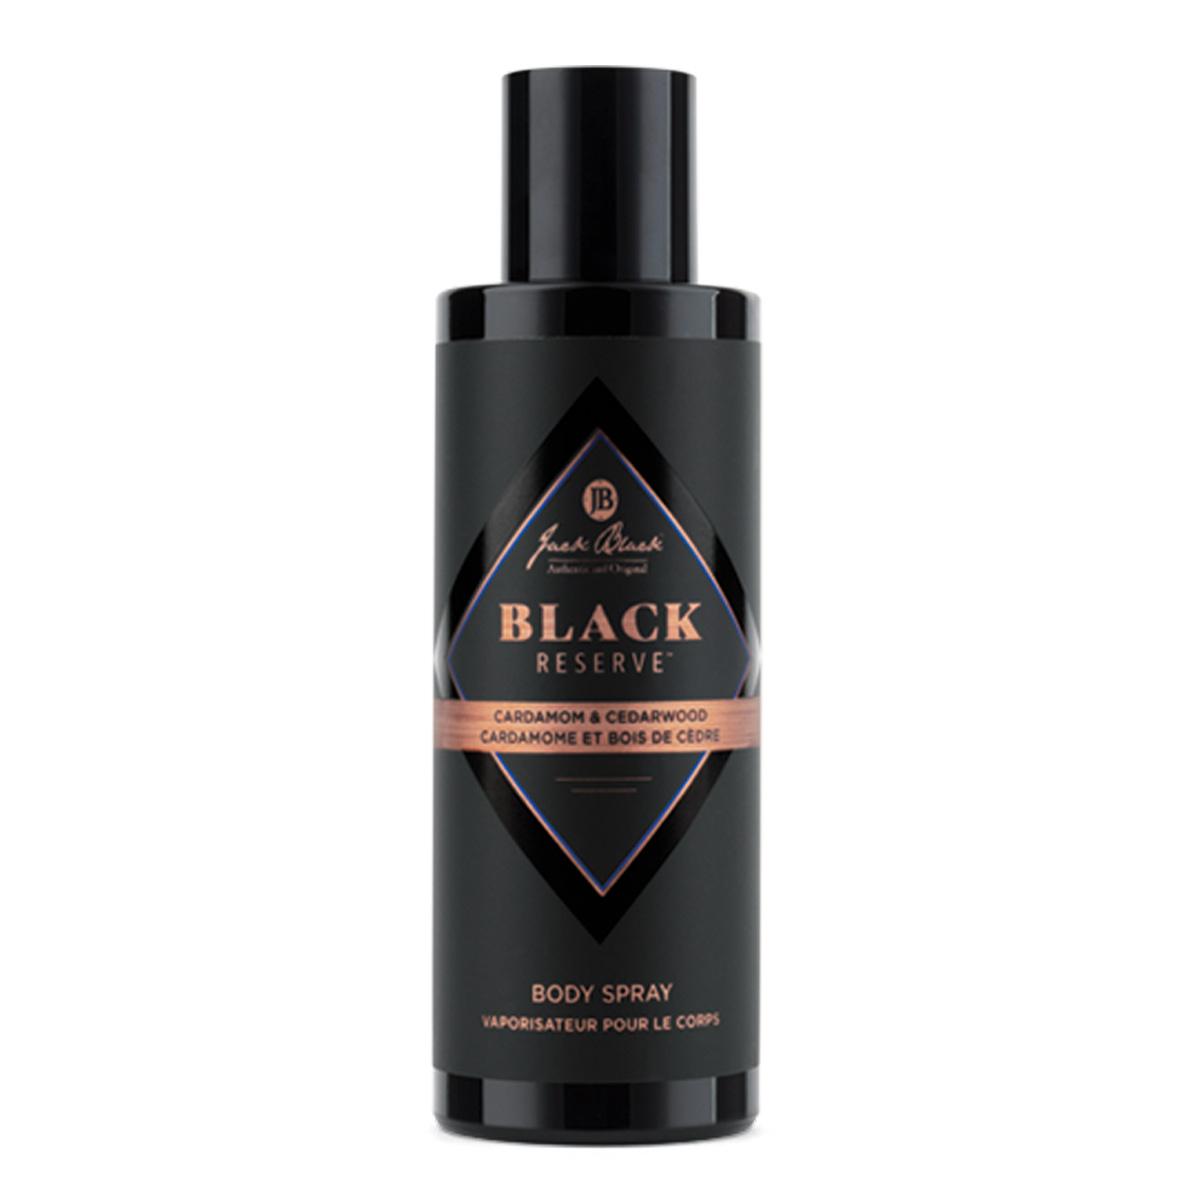 Black Reserve Body Spray 3.4oz